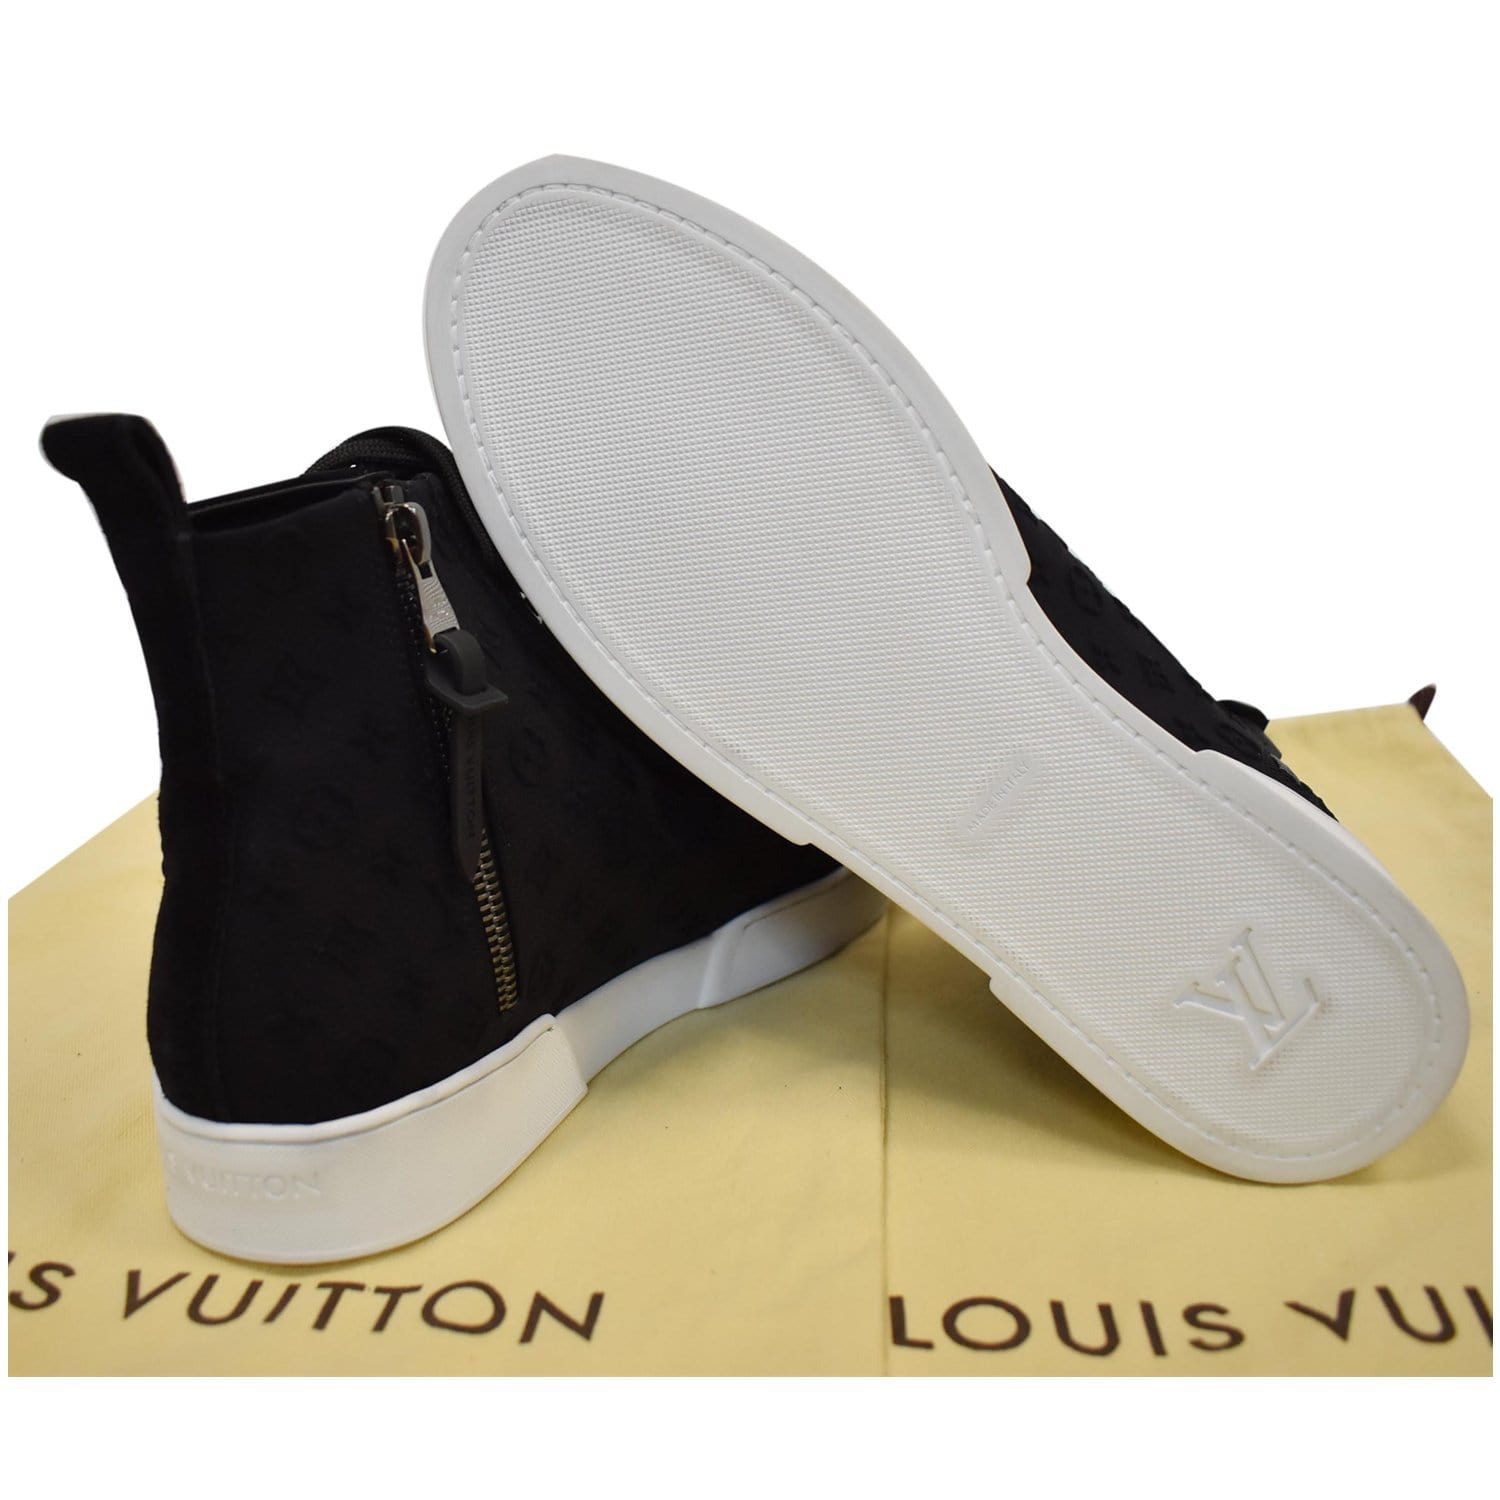 White Louis Vuitton hightop sneakers